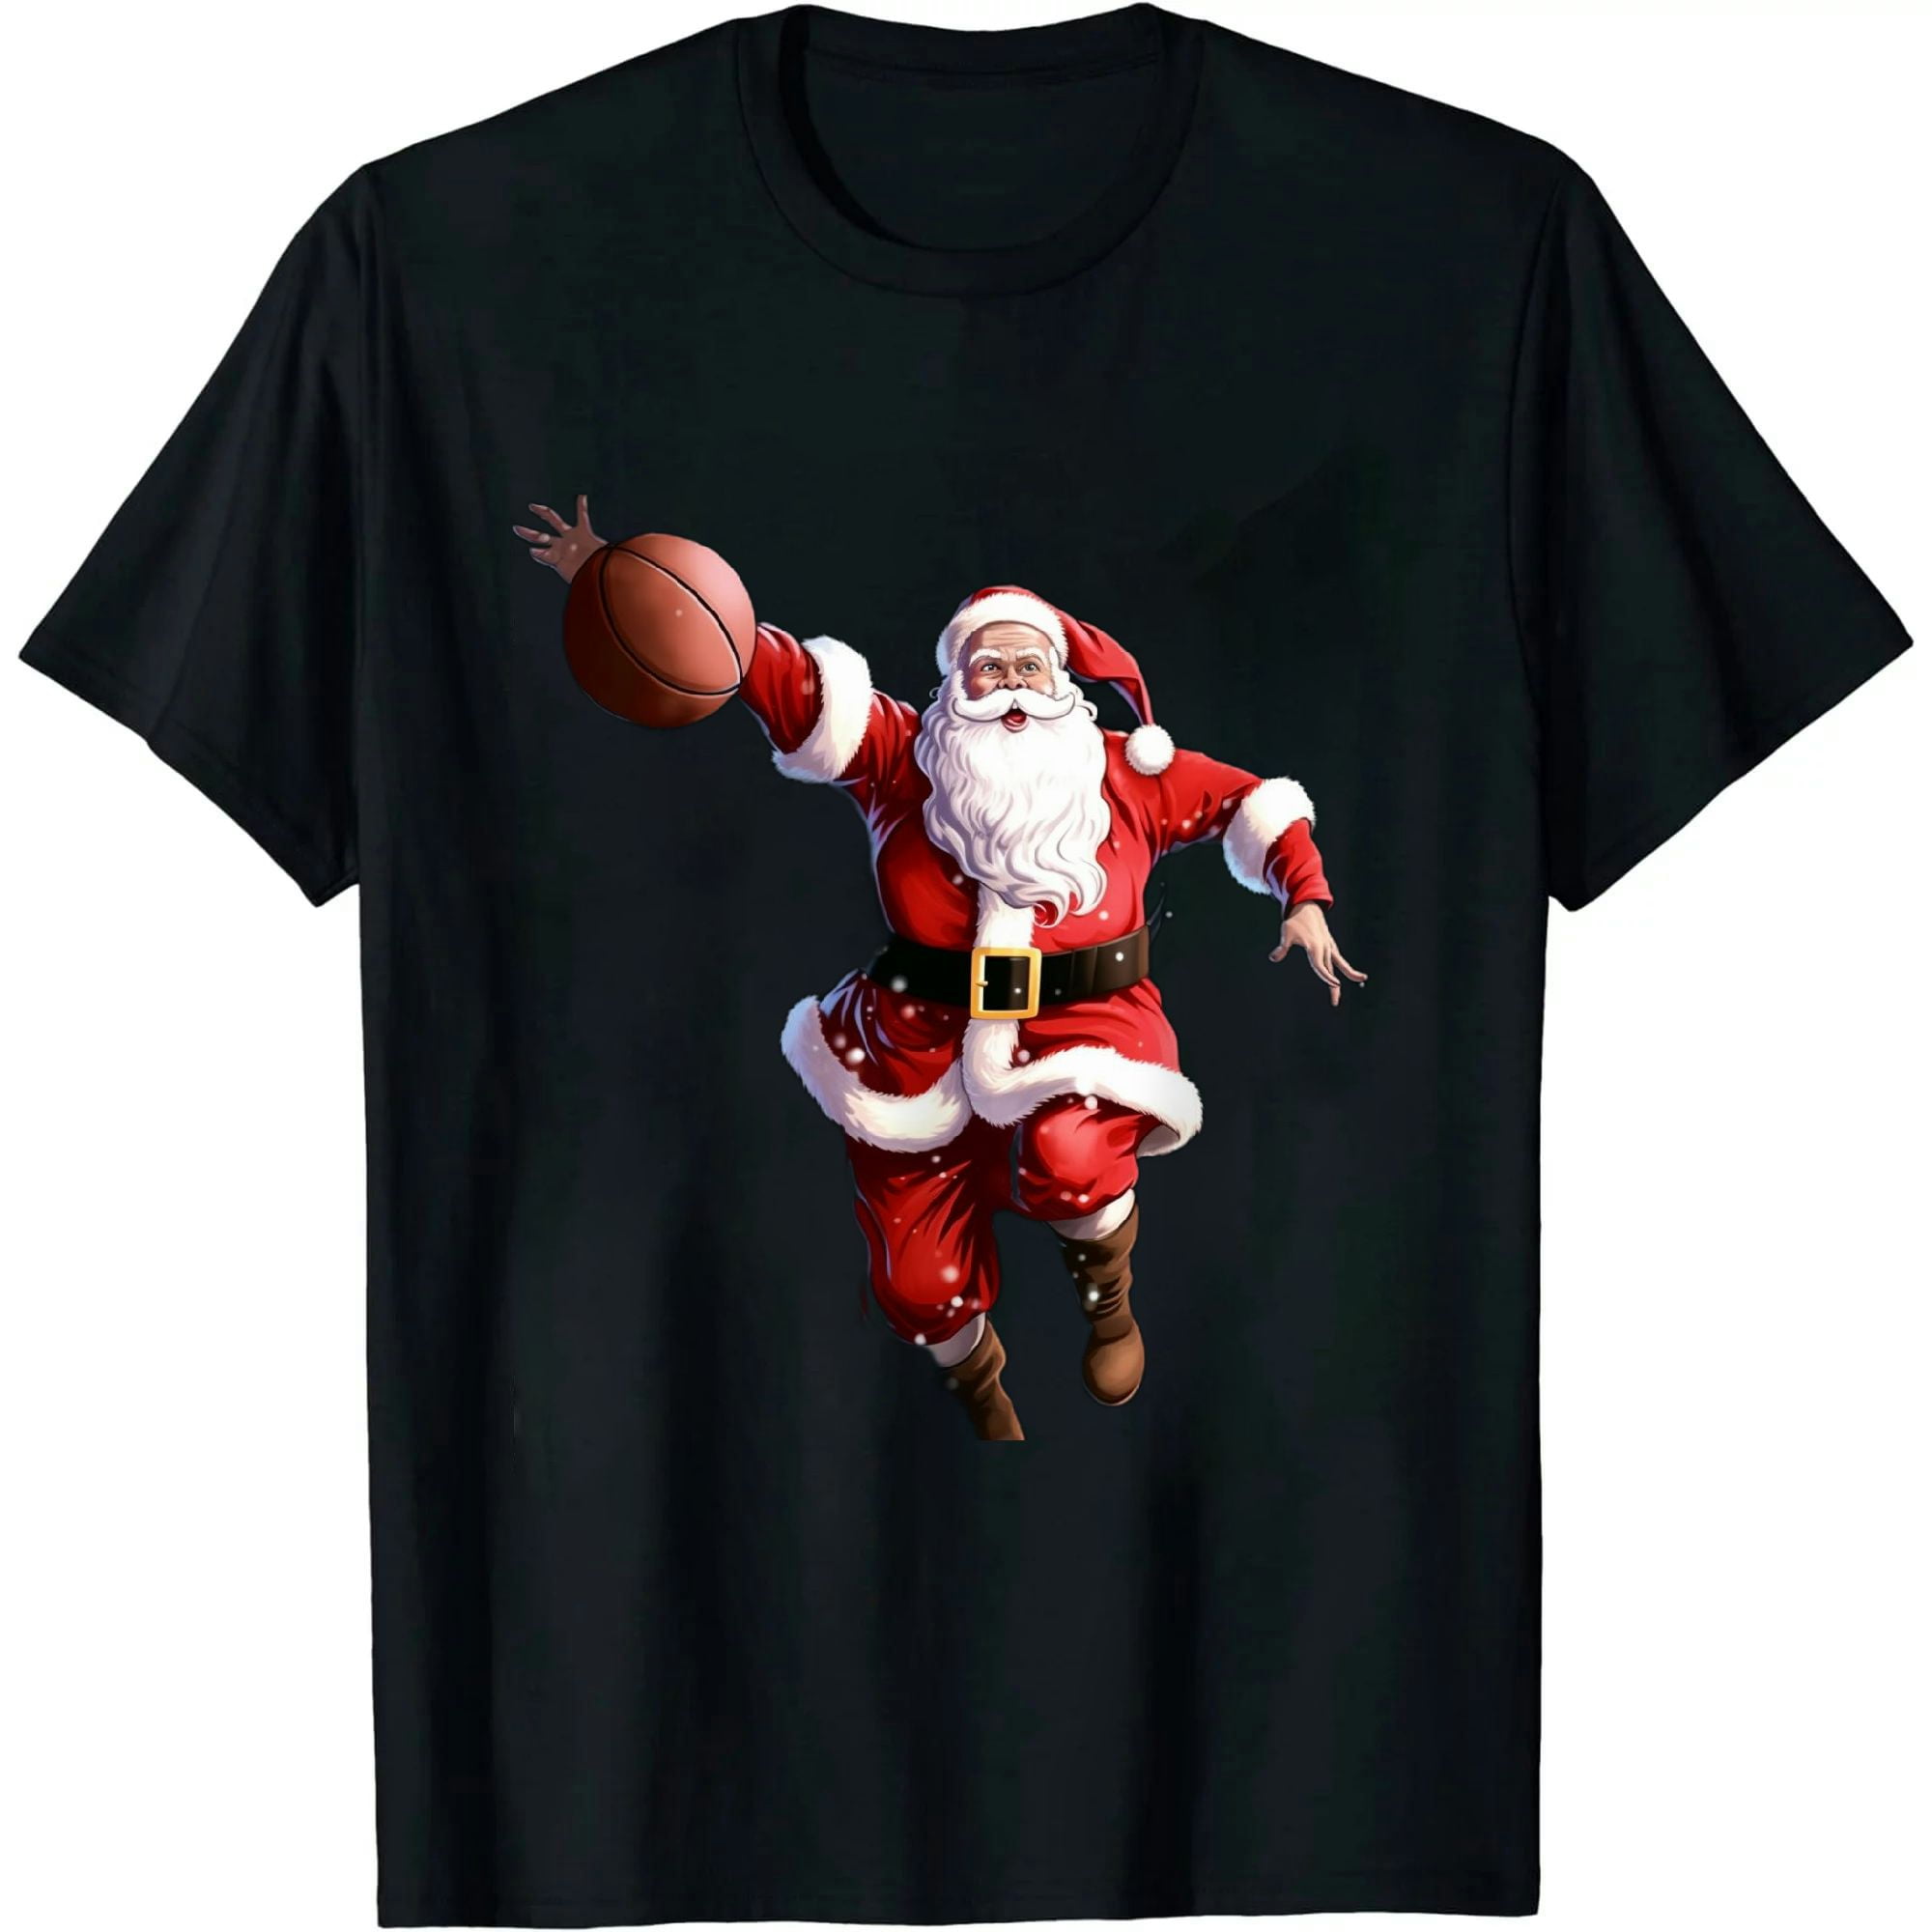 HOMICOZI Basketball Christmas Shirt Men Boys Basketball Santa Claus T ...